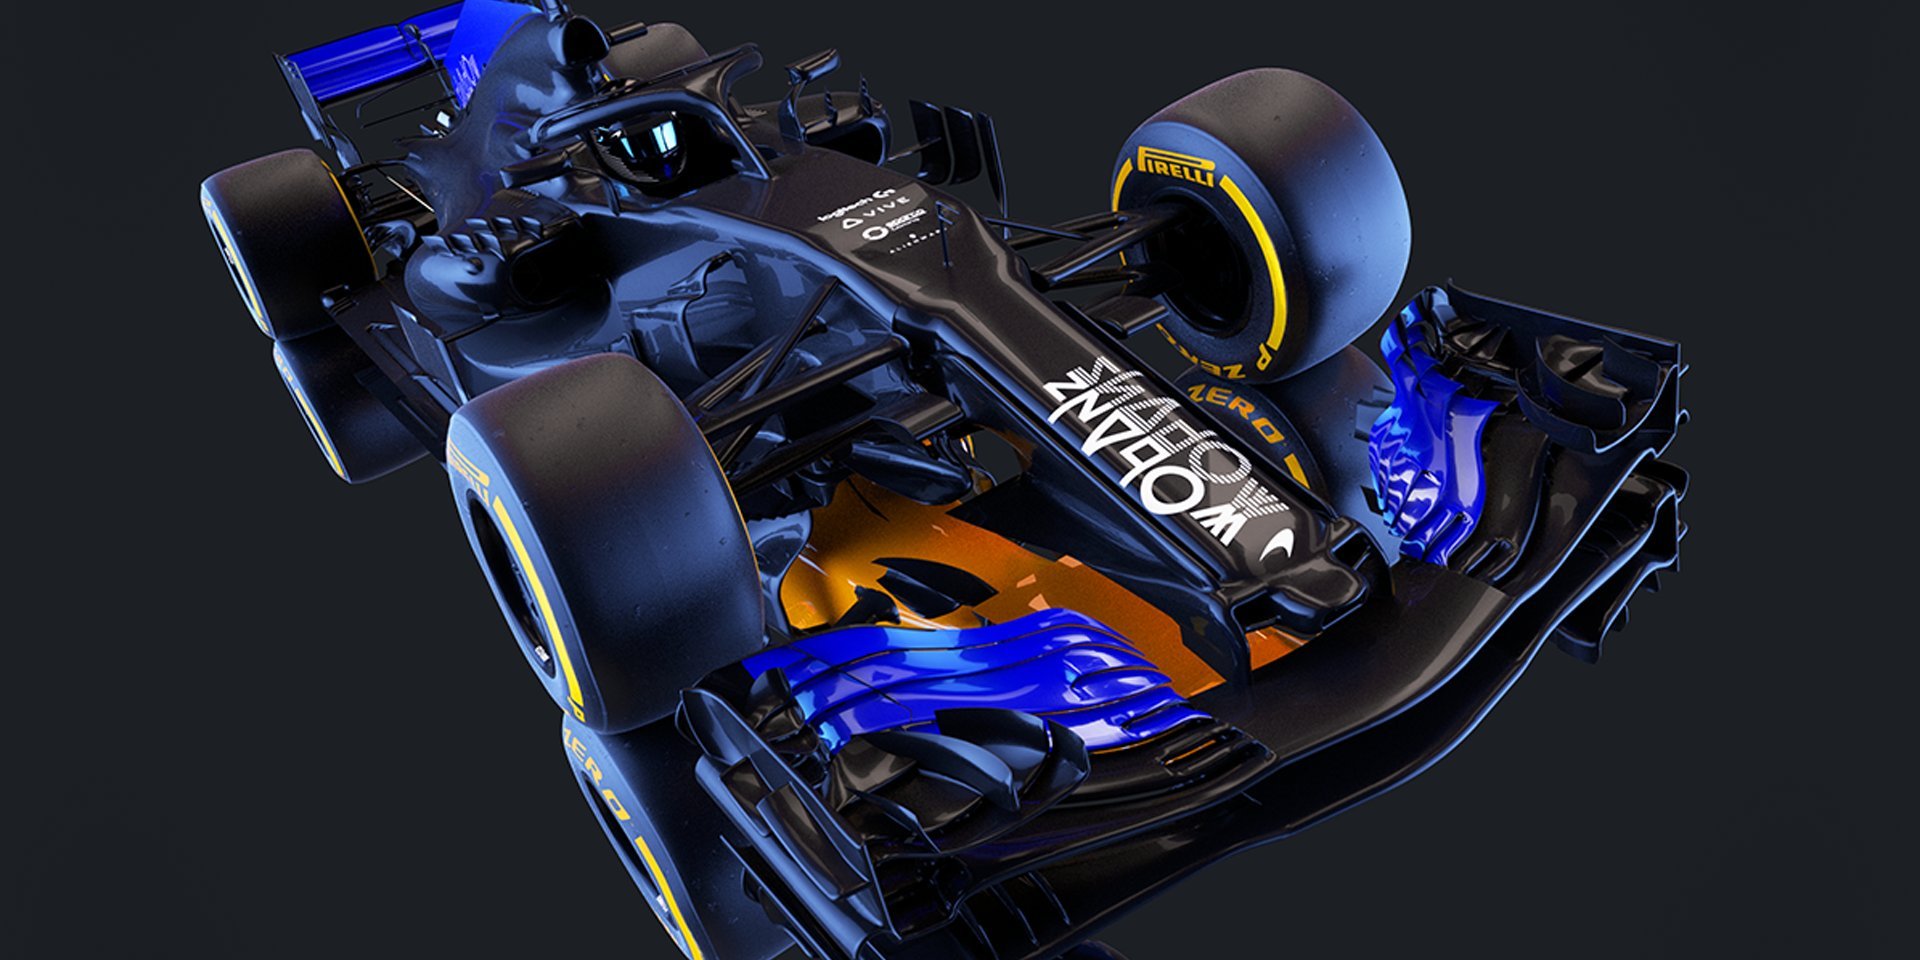 More information about "McLaren presenta lo Shadow Project, nuovo torneo esport"